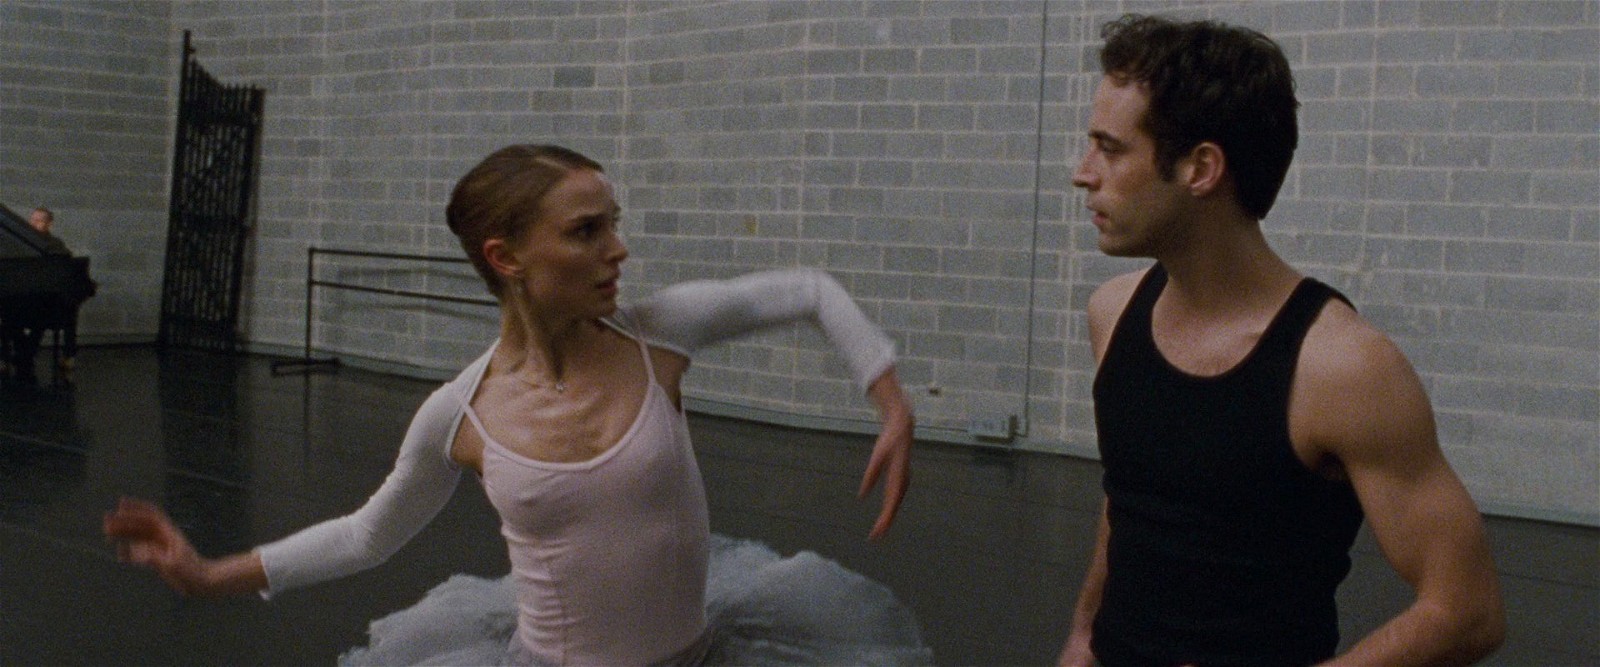 Natalie Portman and Benjamin Millepied in Black Swan (2010)